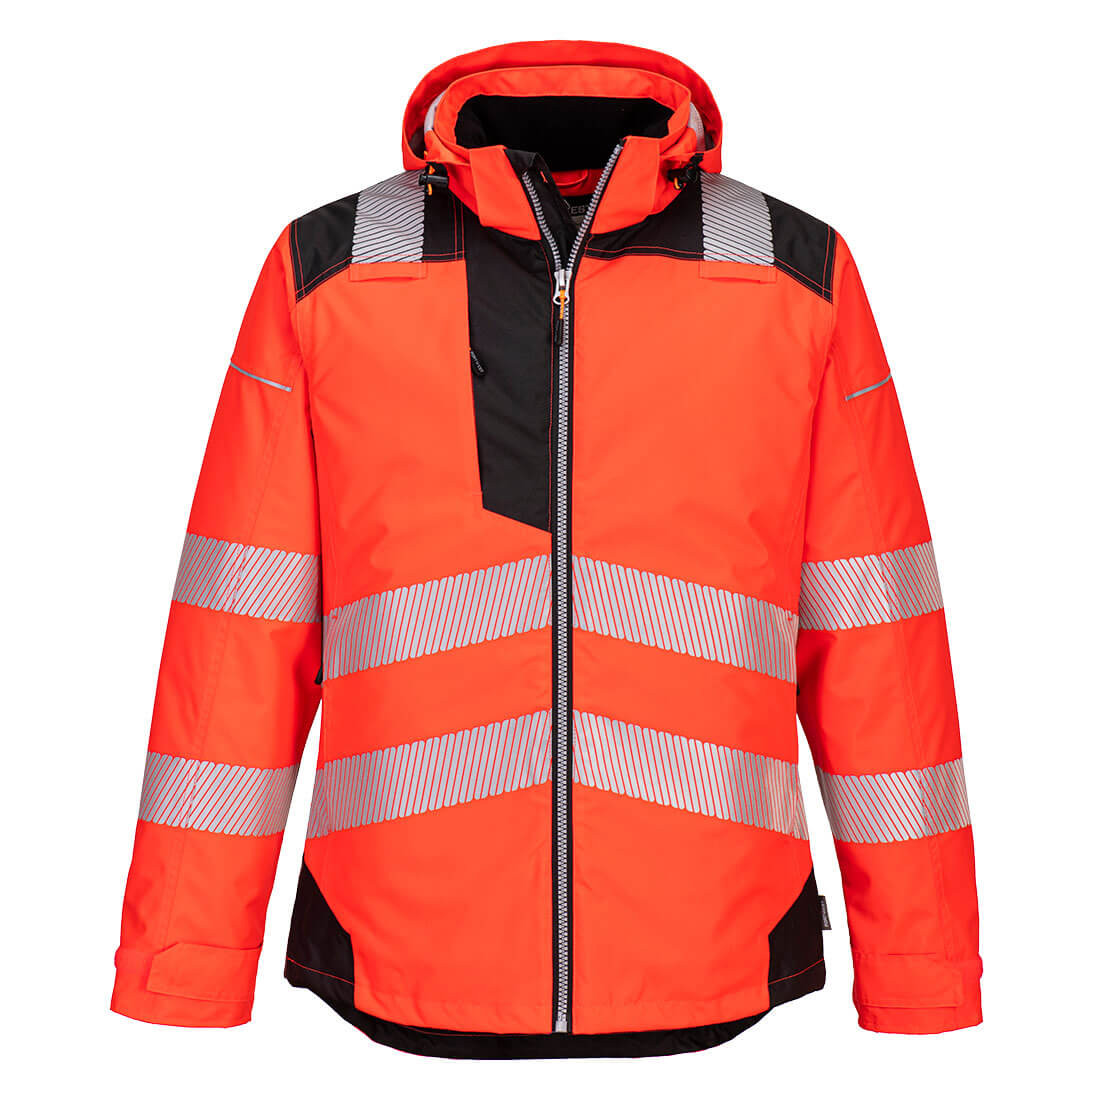 PW3 Hi-Vis Winter Jacket - Safetywear